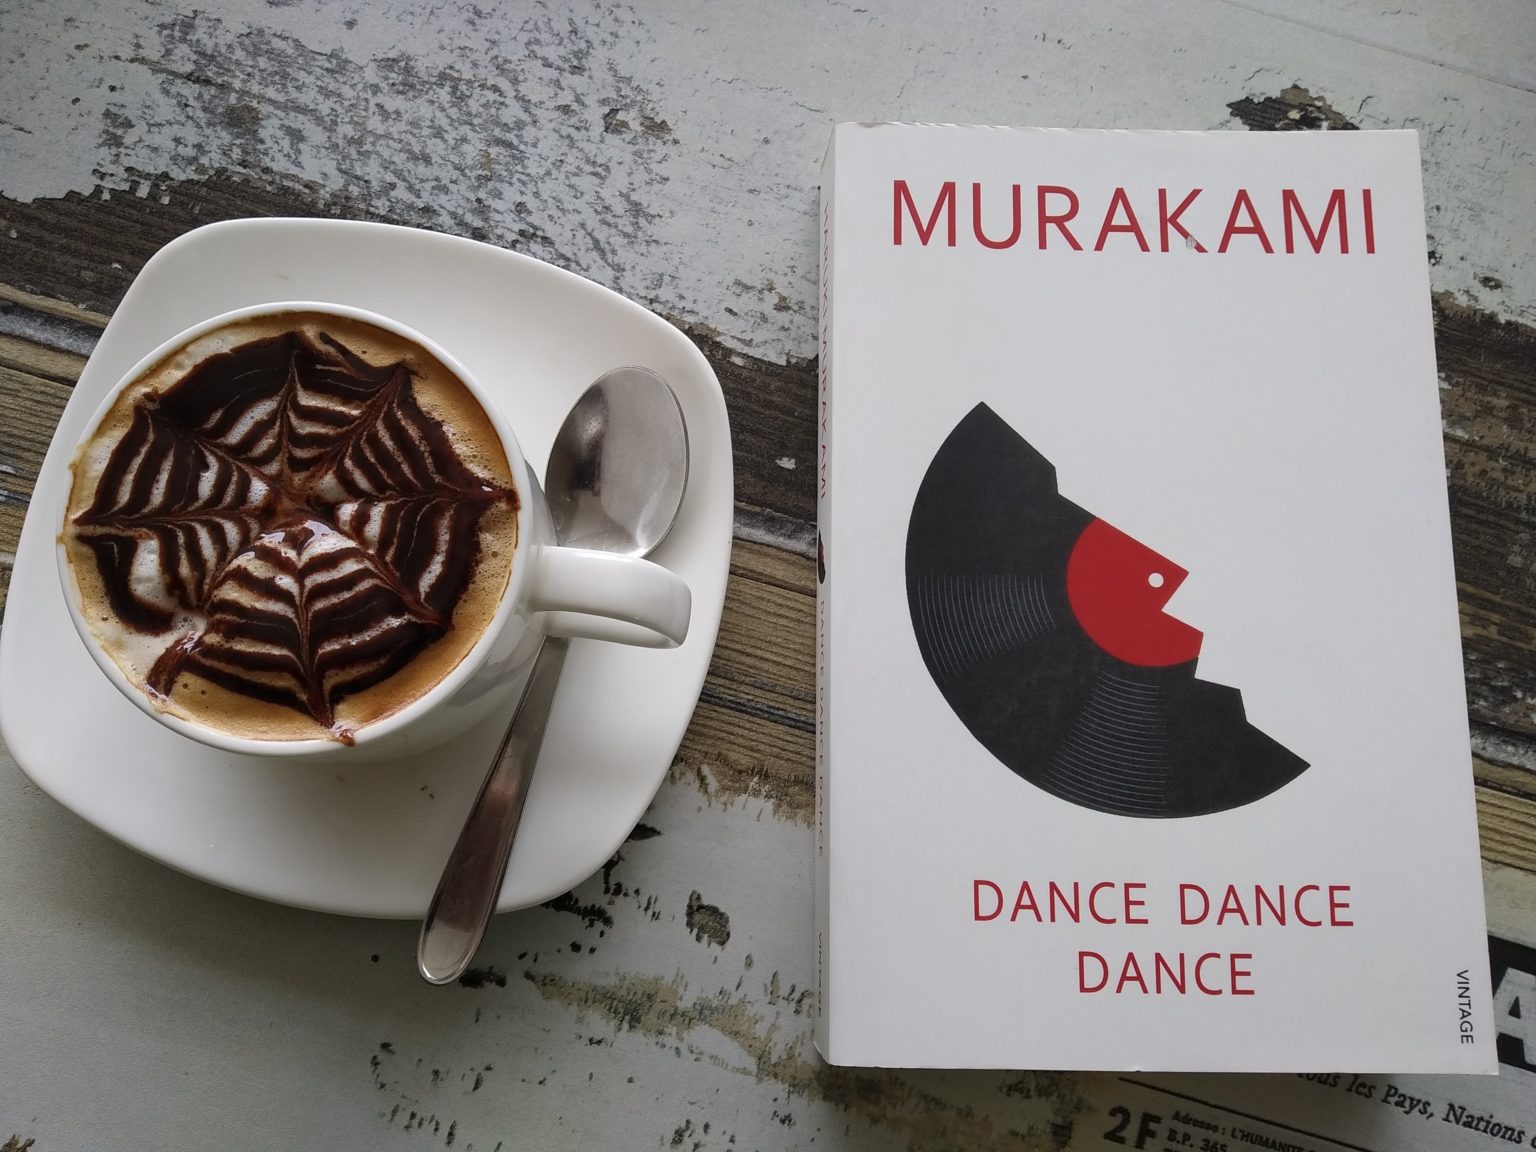 dance dance dance murakami quotes